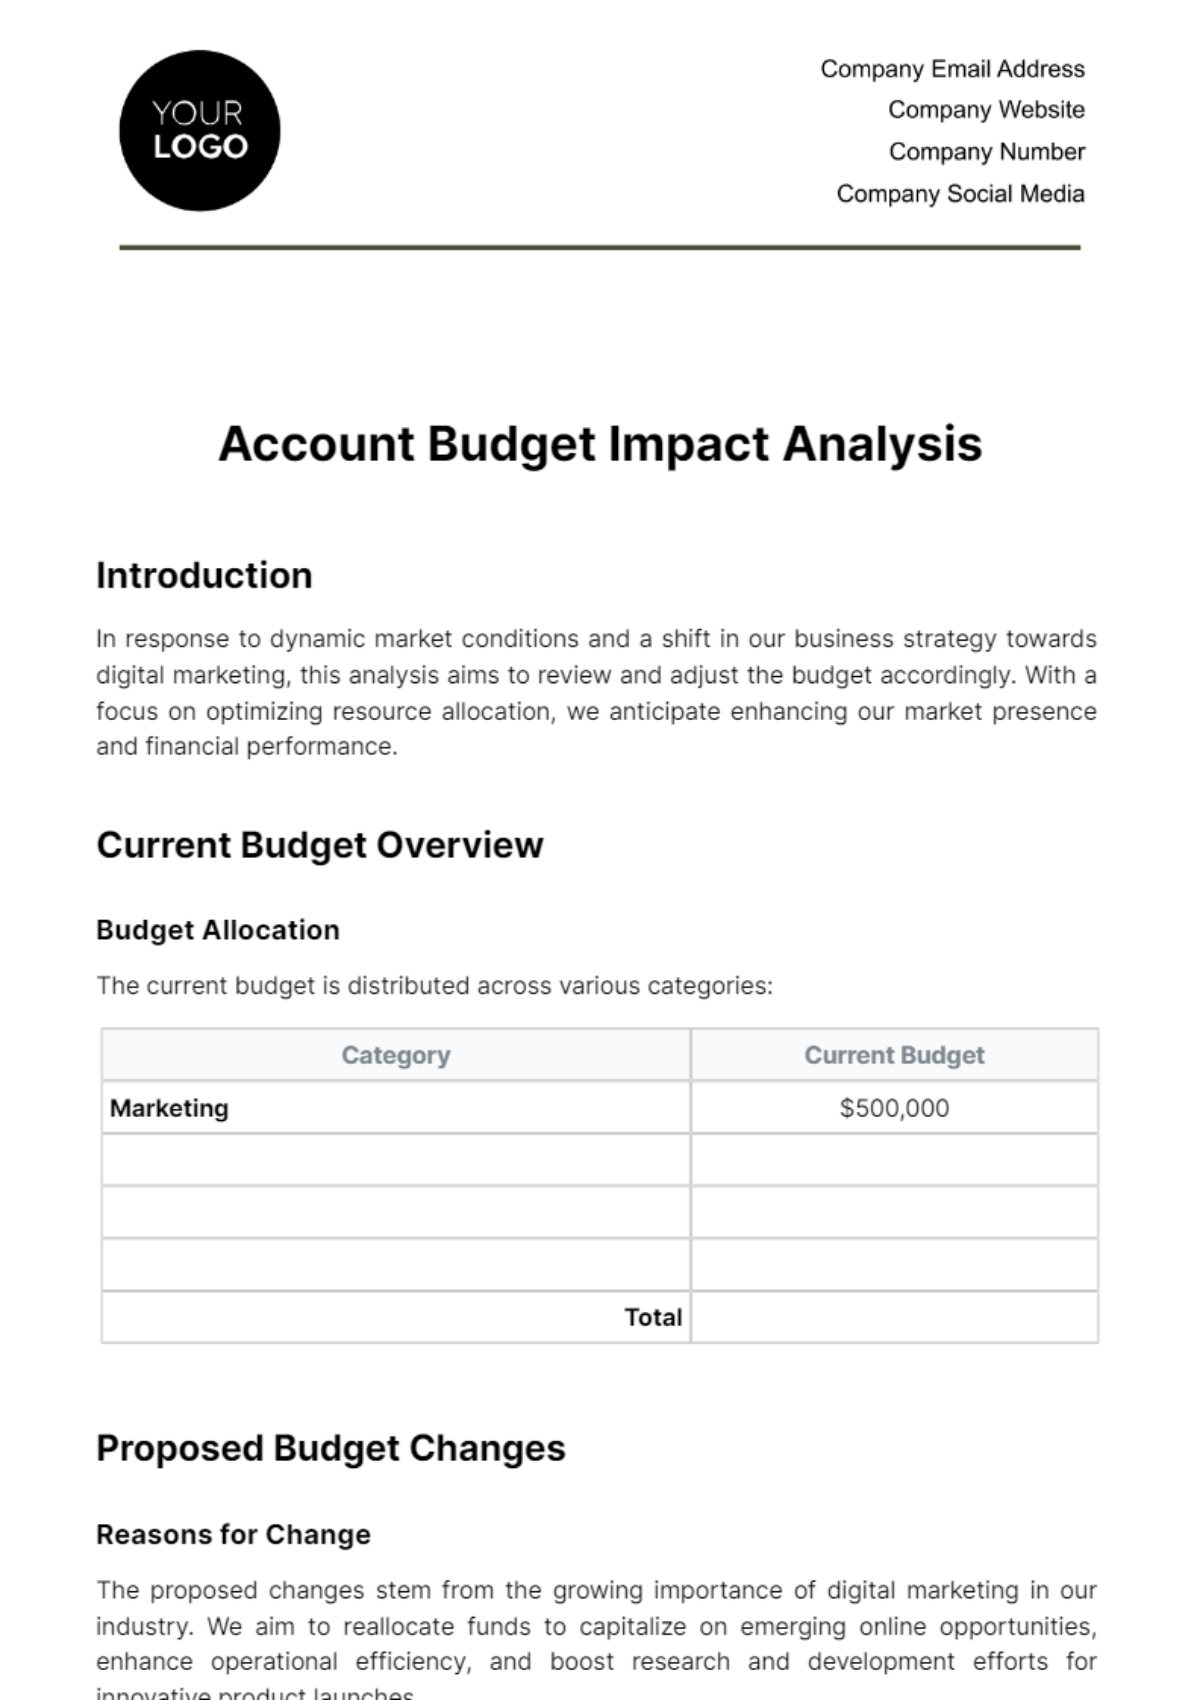 Free Account Budget Impact Analysis Template